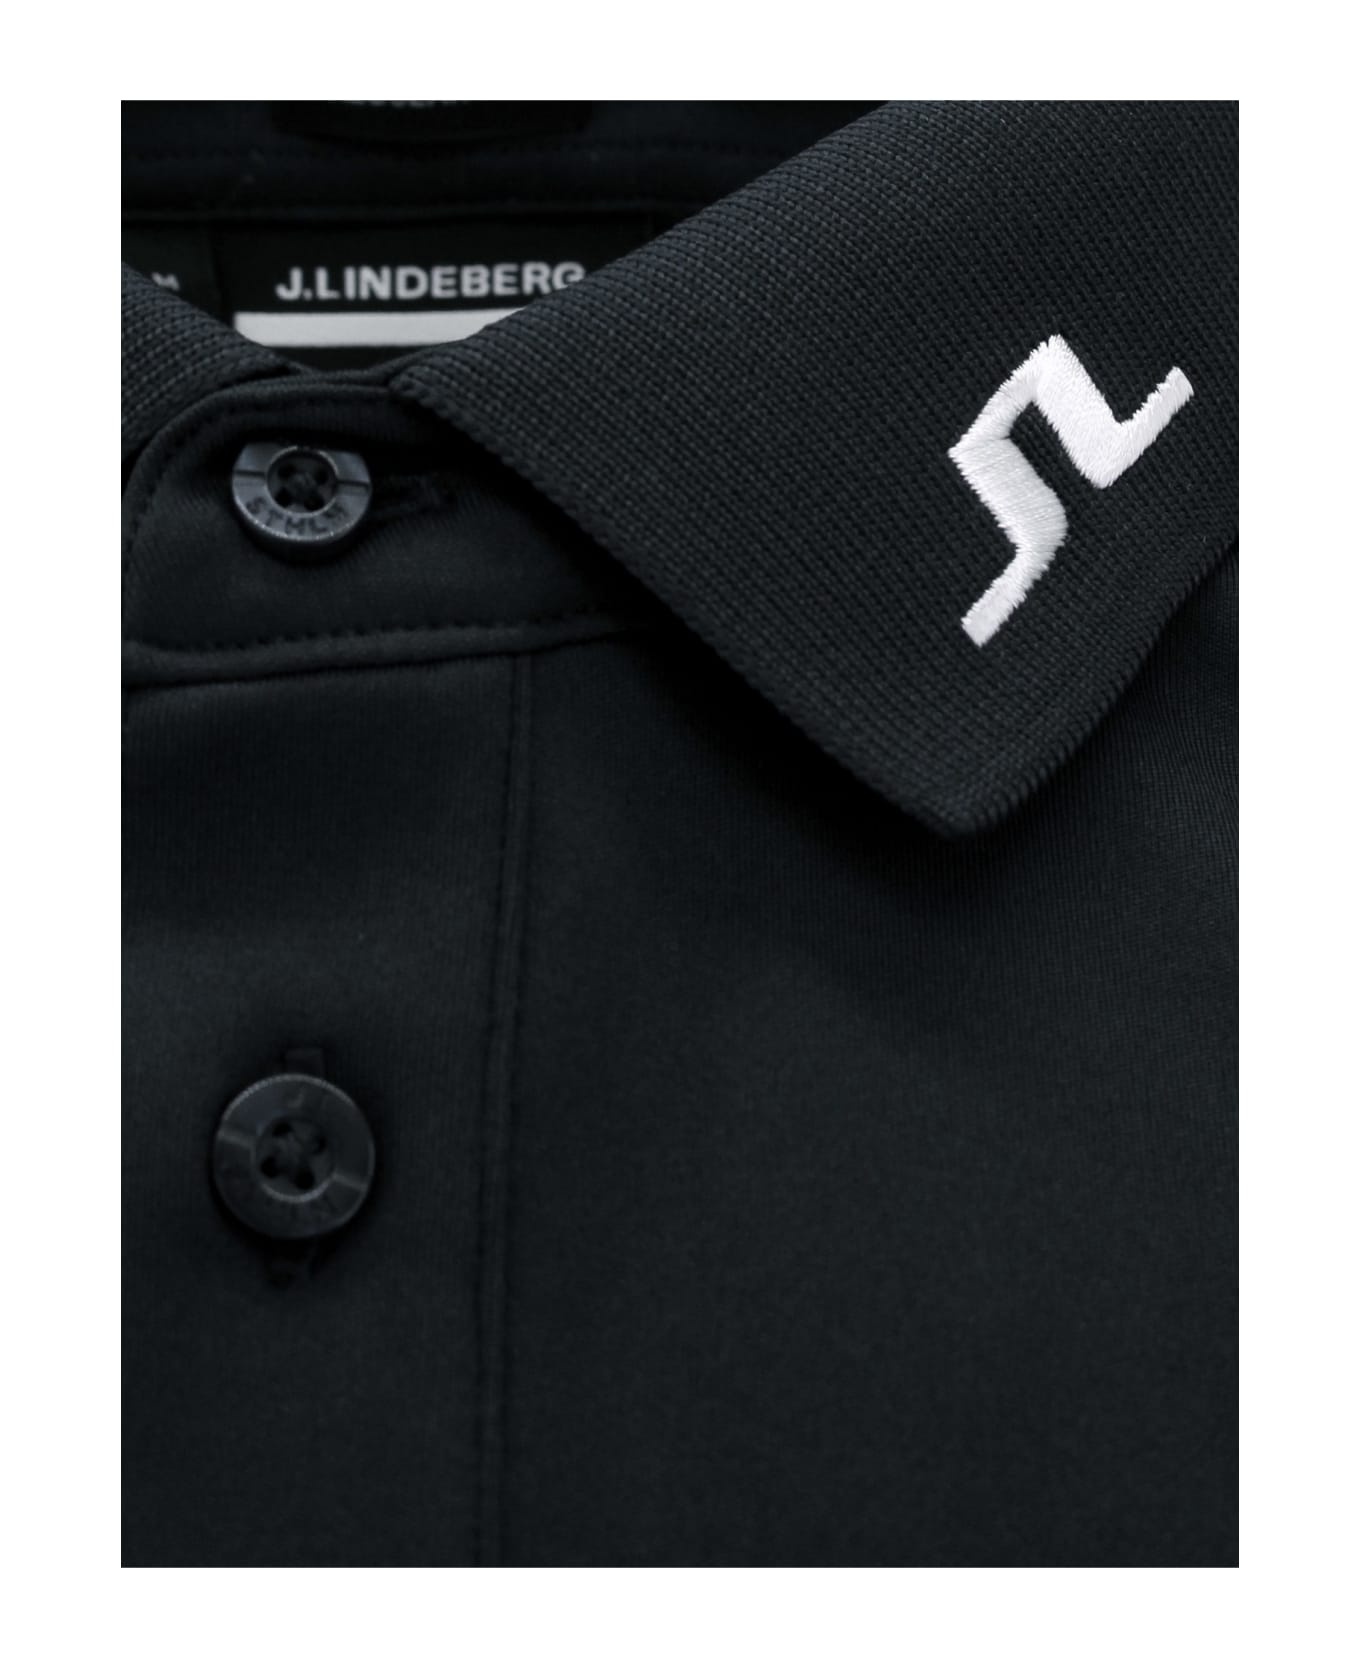 J.Lindeberg Kv Polo Shirt - Black